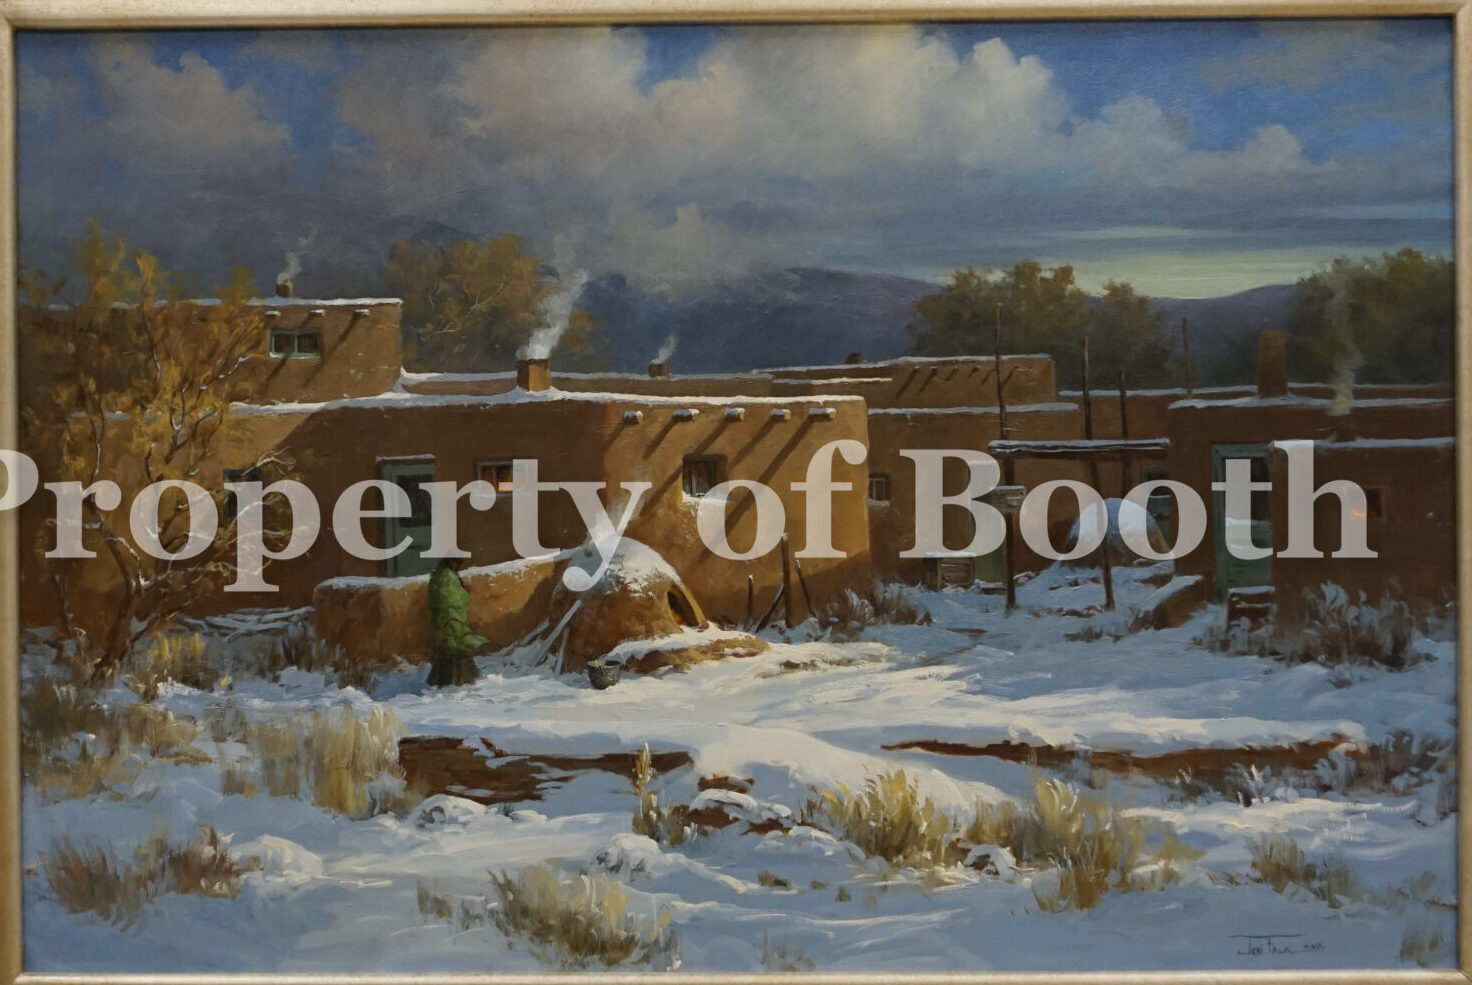 © Joni Falk, Winter Serenity, n.d., oil on canvas, 23.5 x 35.5", Gift of Levon Thomas